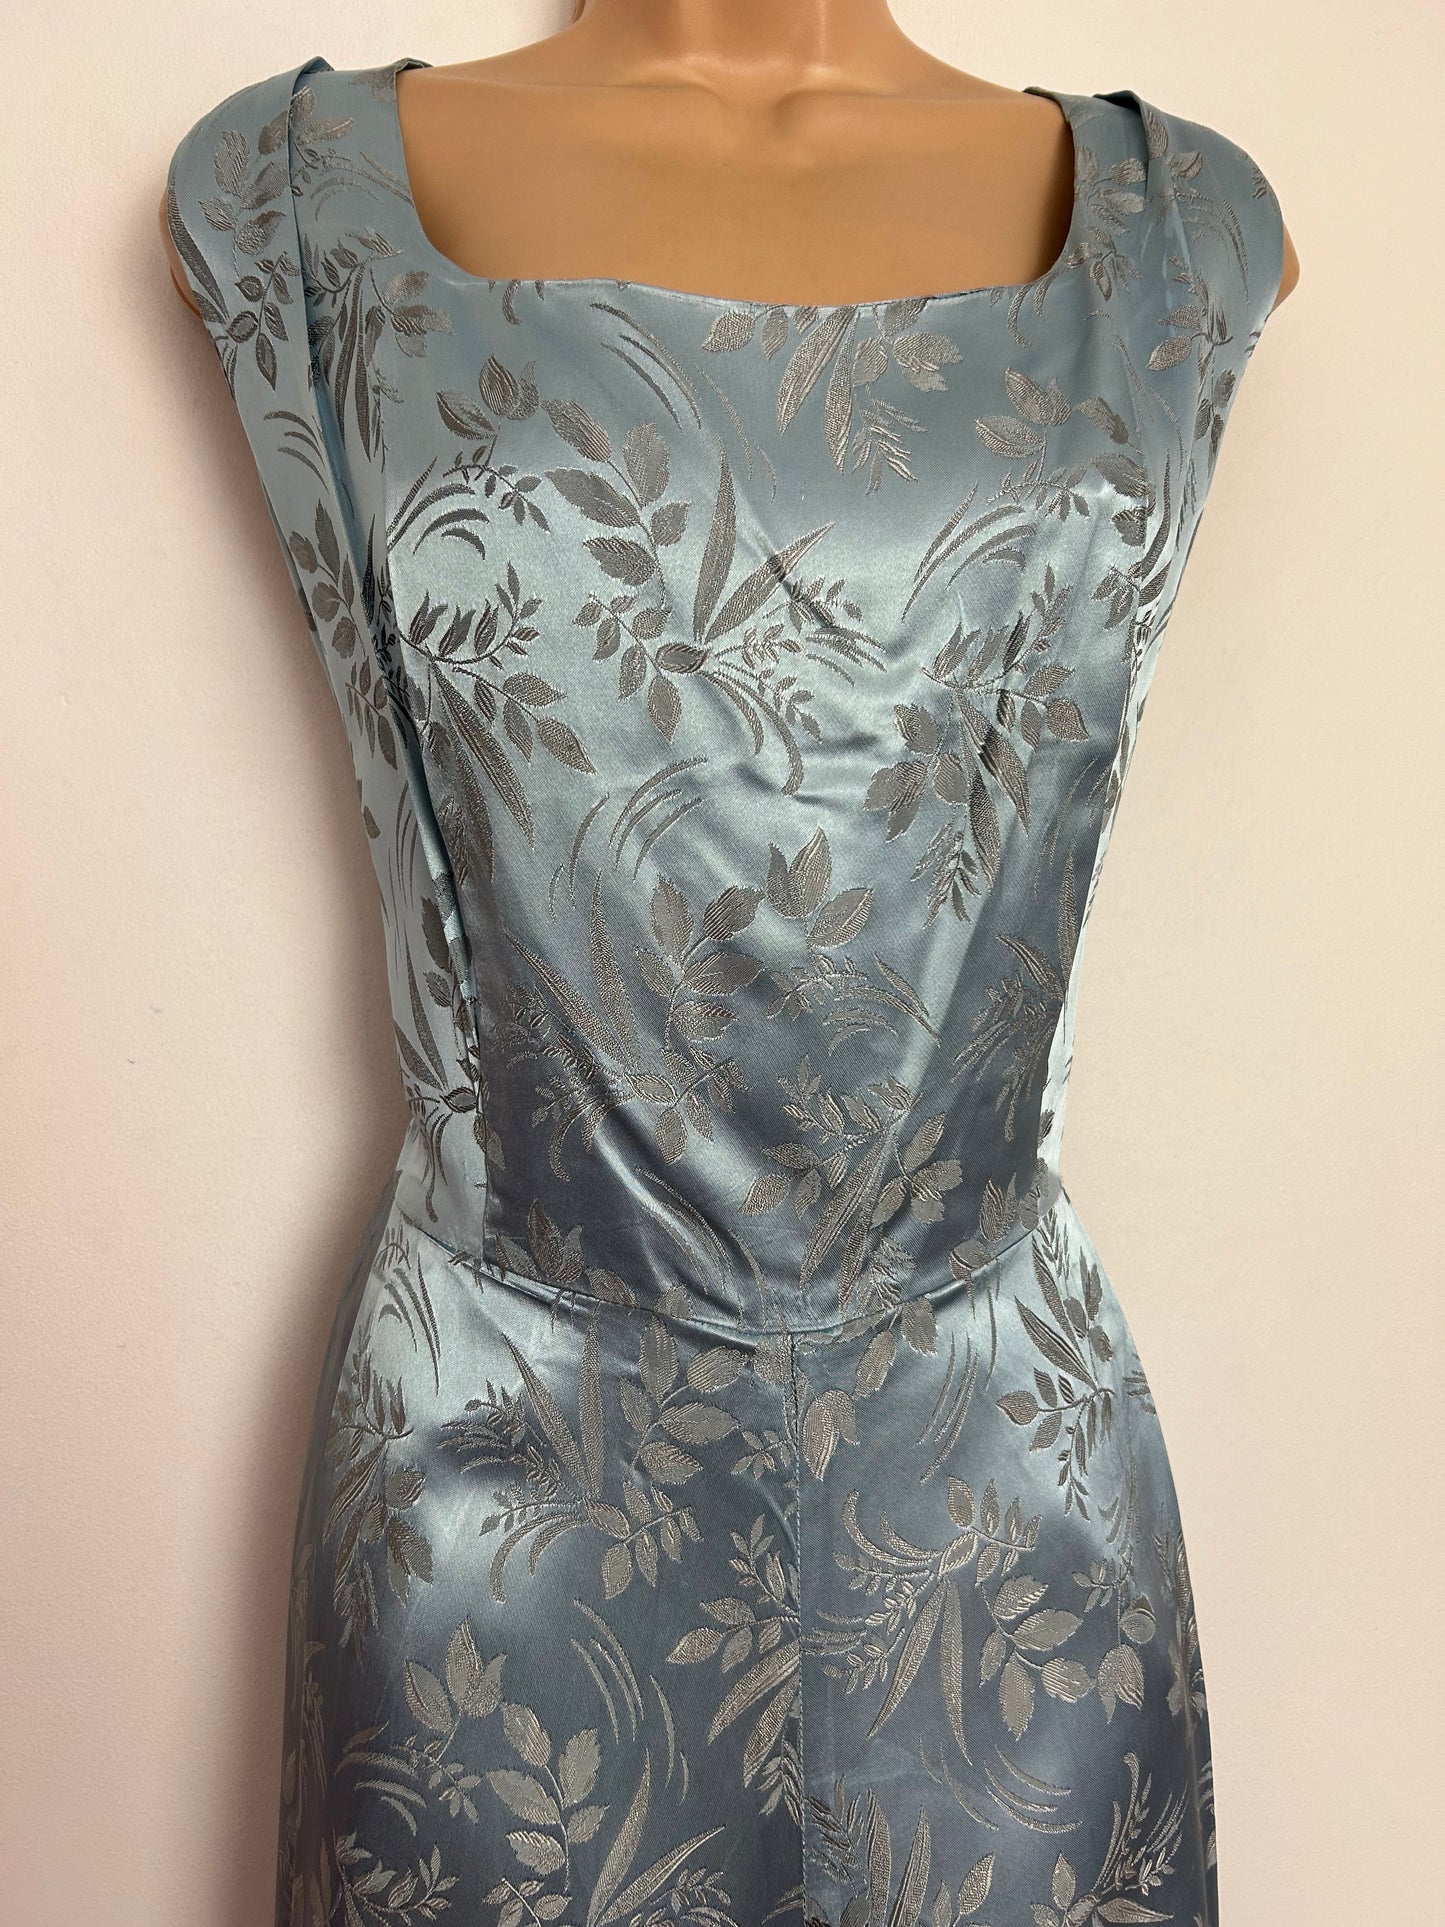 Vintage Early 1950s "O.Slender" Model UK Size 14-16 Beautiful Pale Blue Leaf Pattern Jacquard Occasion Maxi Dress